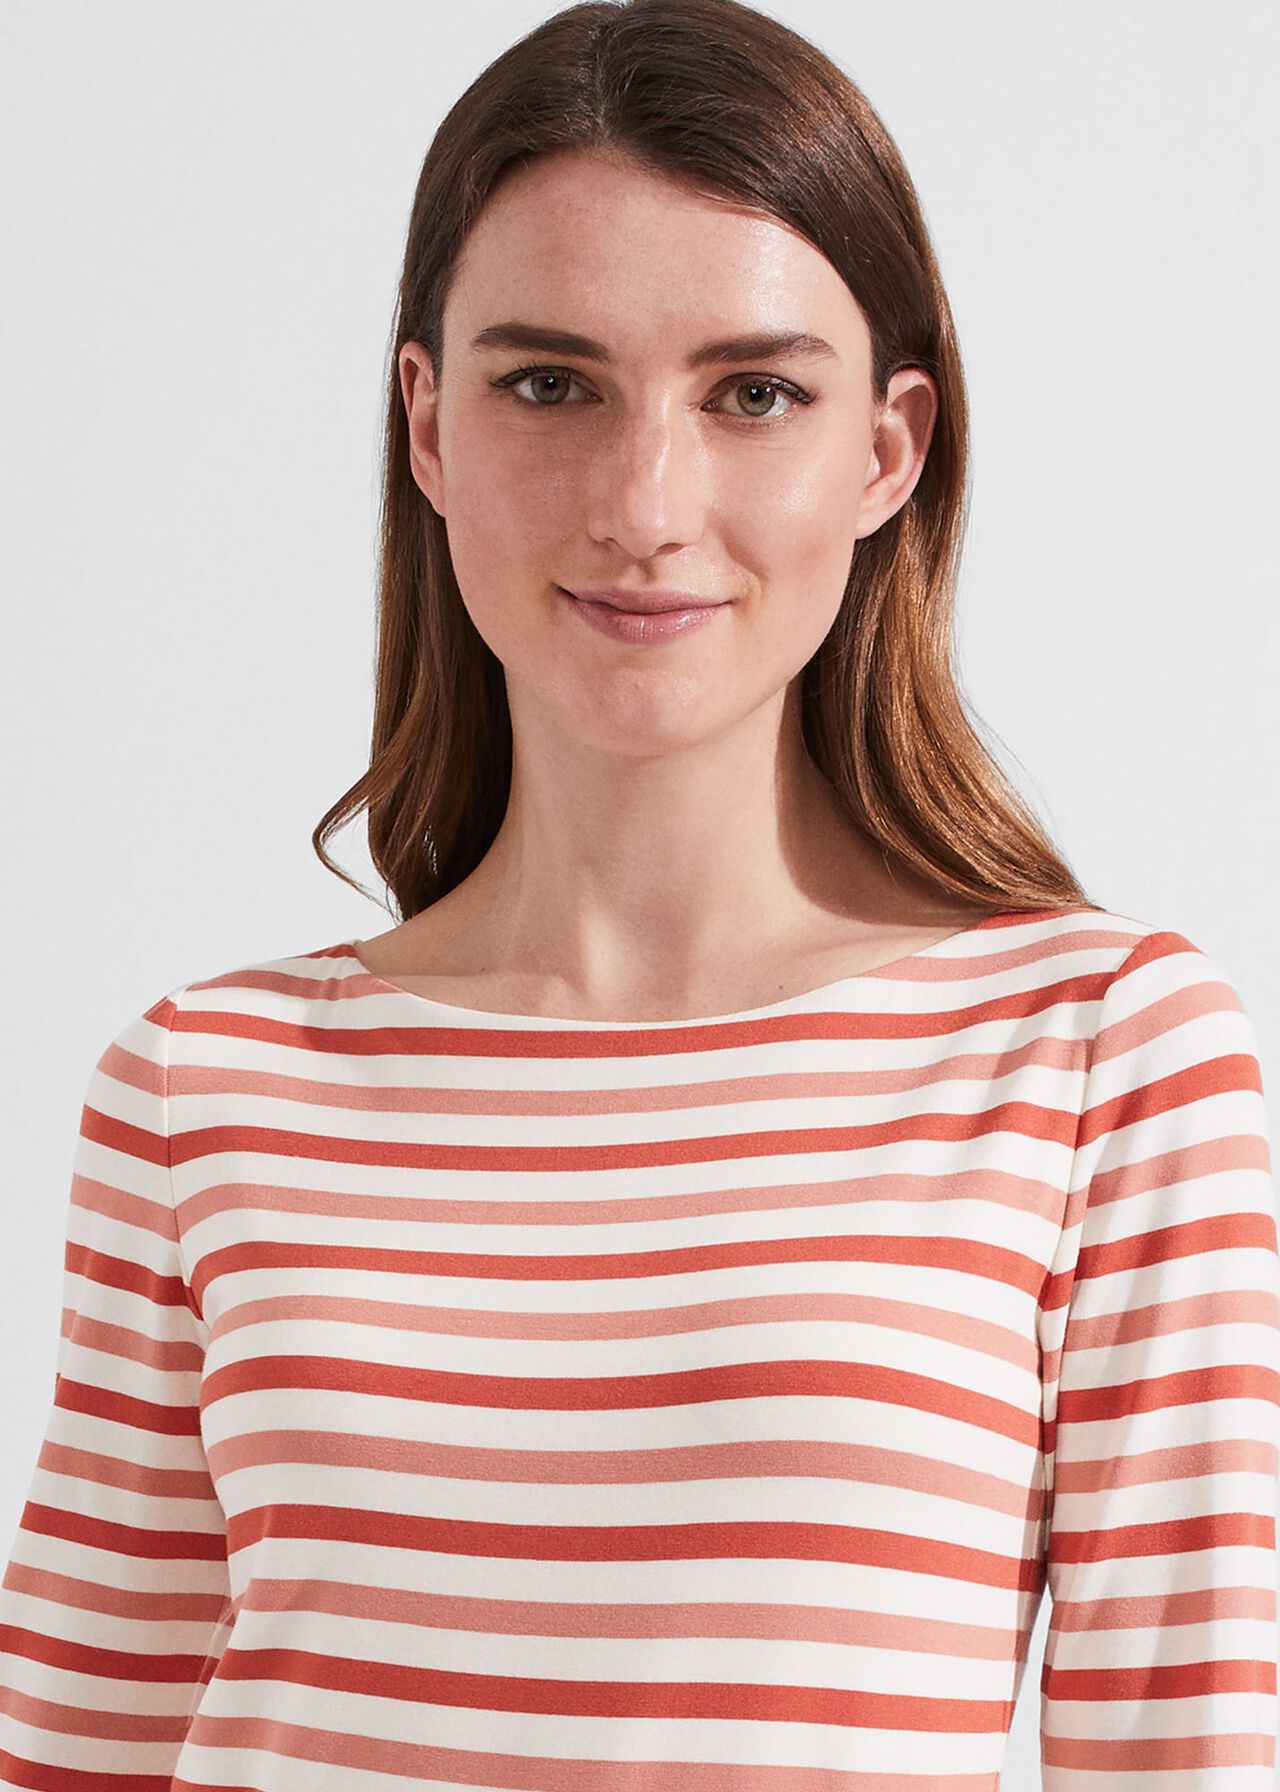 Sonya Striped Top, Ivory Multi, hi-res